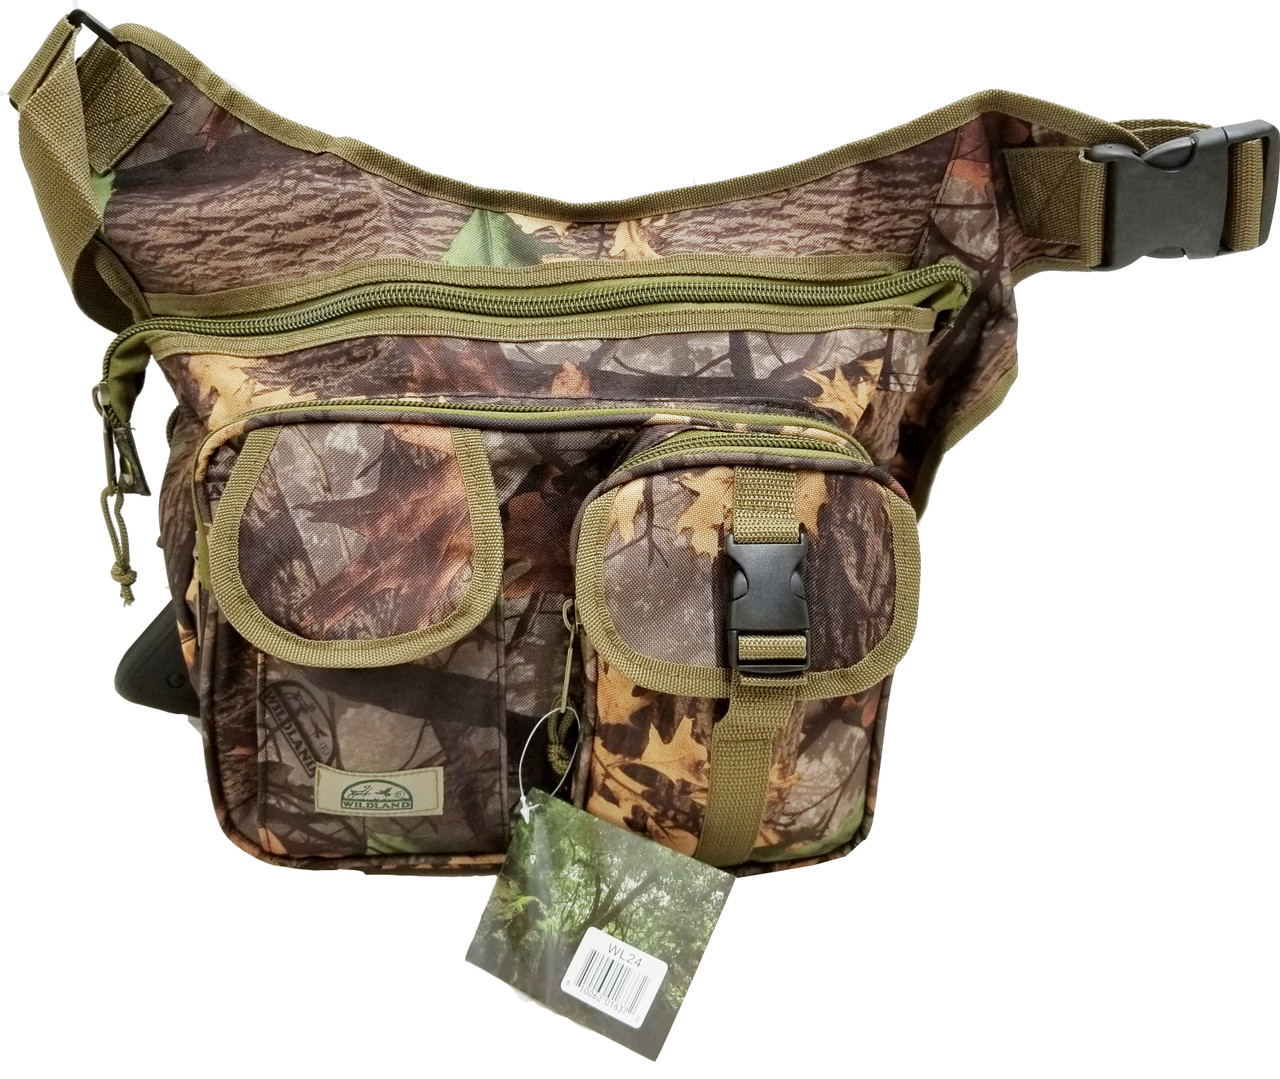 Explorer Wildland -Realtree Like- Hunting Camo Multi-Functional Tactical Messenger Bag - Documents Bag- Multiple Pocket & Compartments